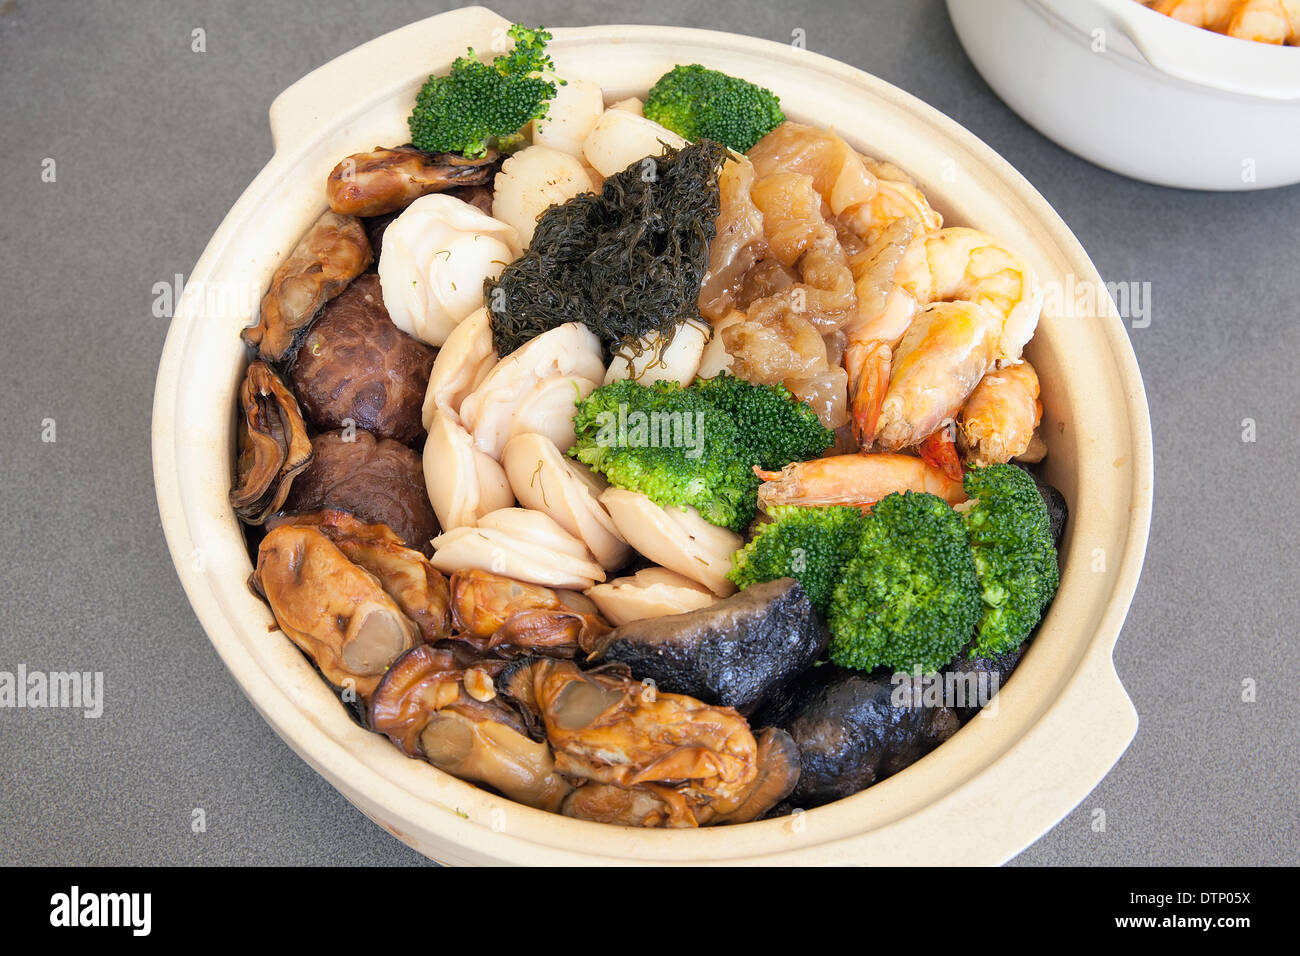 Poon Choi Hong Kong cucina Cantonese festa grande ciotola con frutti di mare e verdure per il nuovo anno cinese a cena Foto Stock